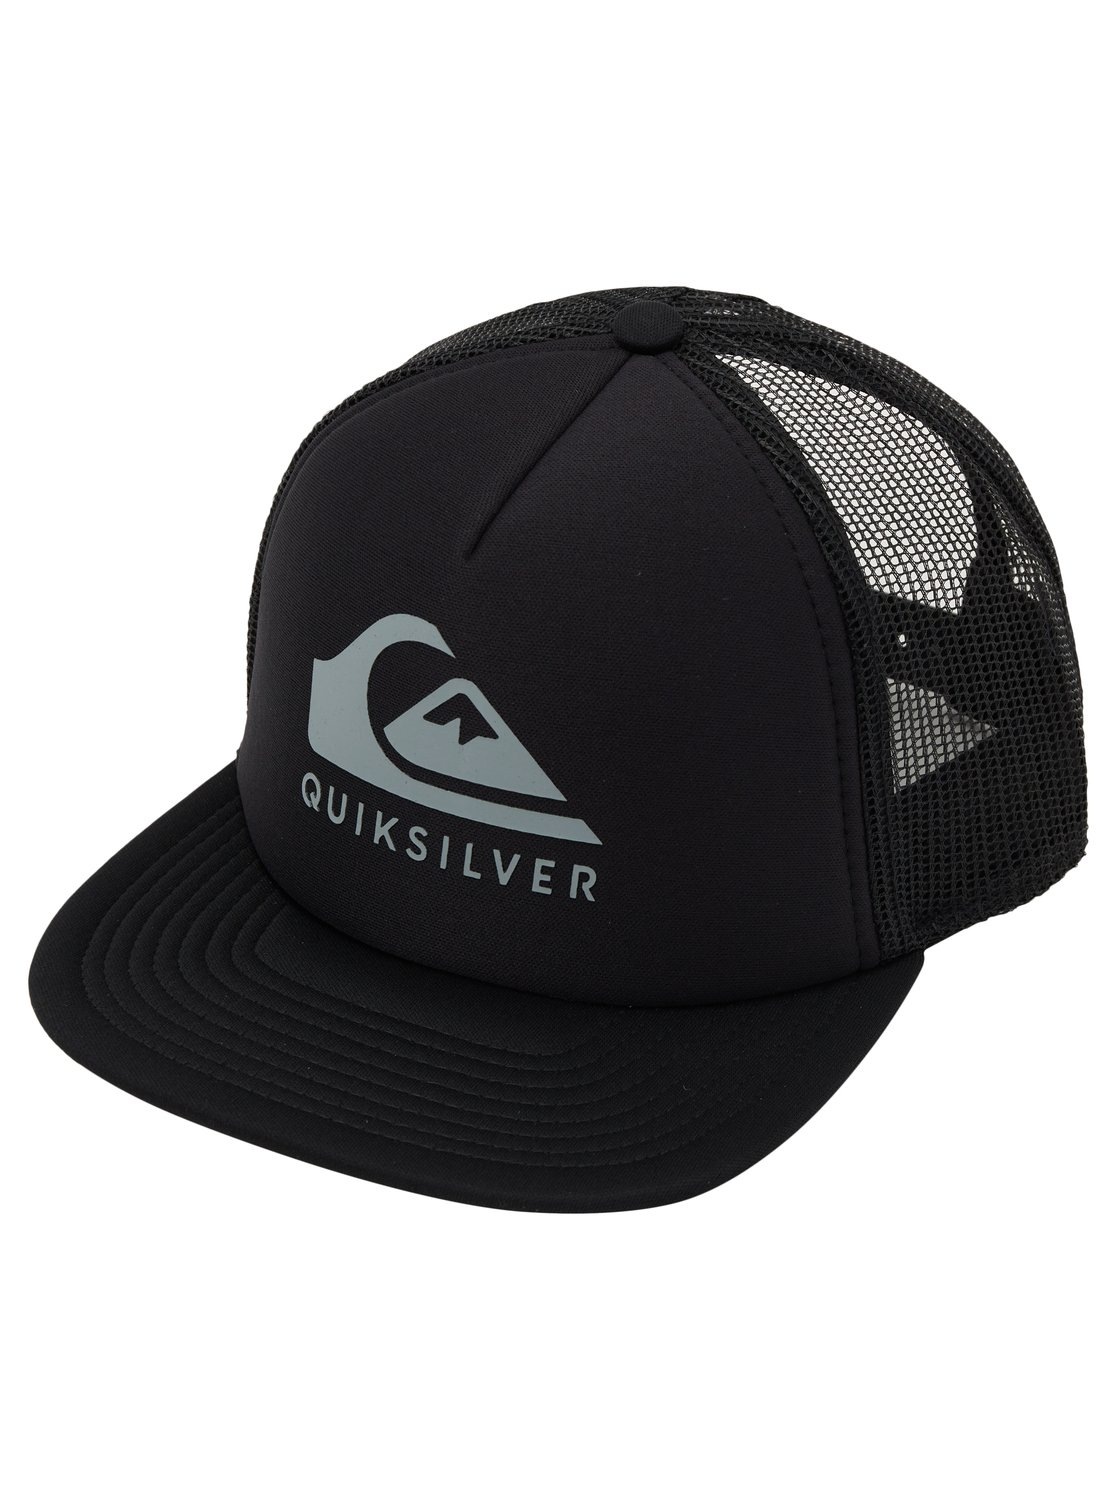 Quiksilver Trucker Cap | Shop bestellen im »Foamslayer« Online OTTO OTTO